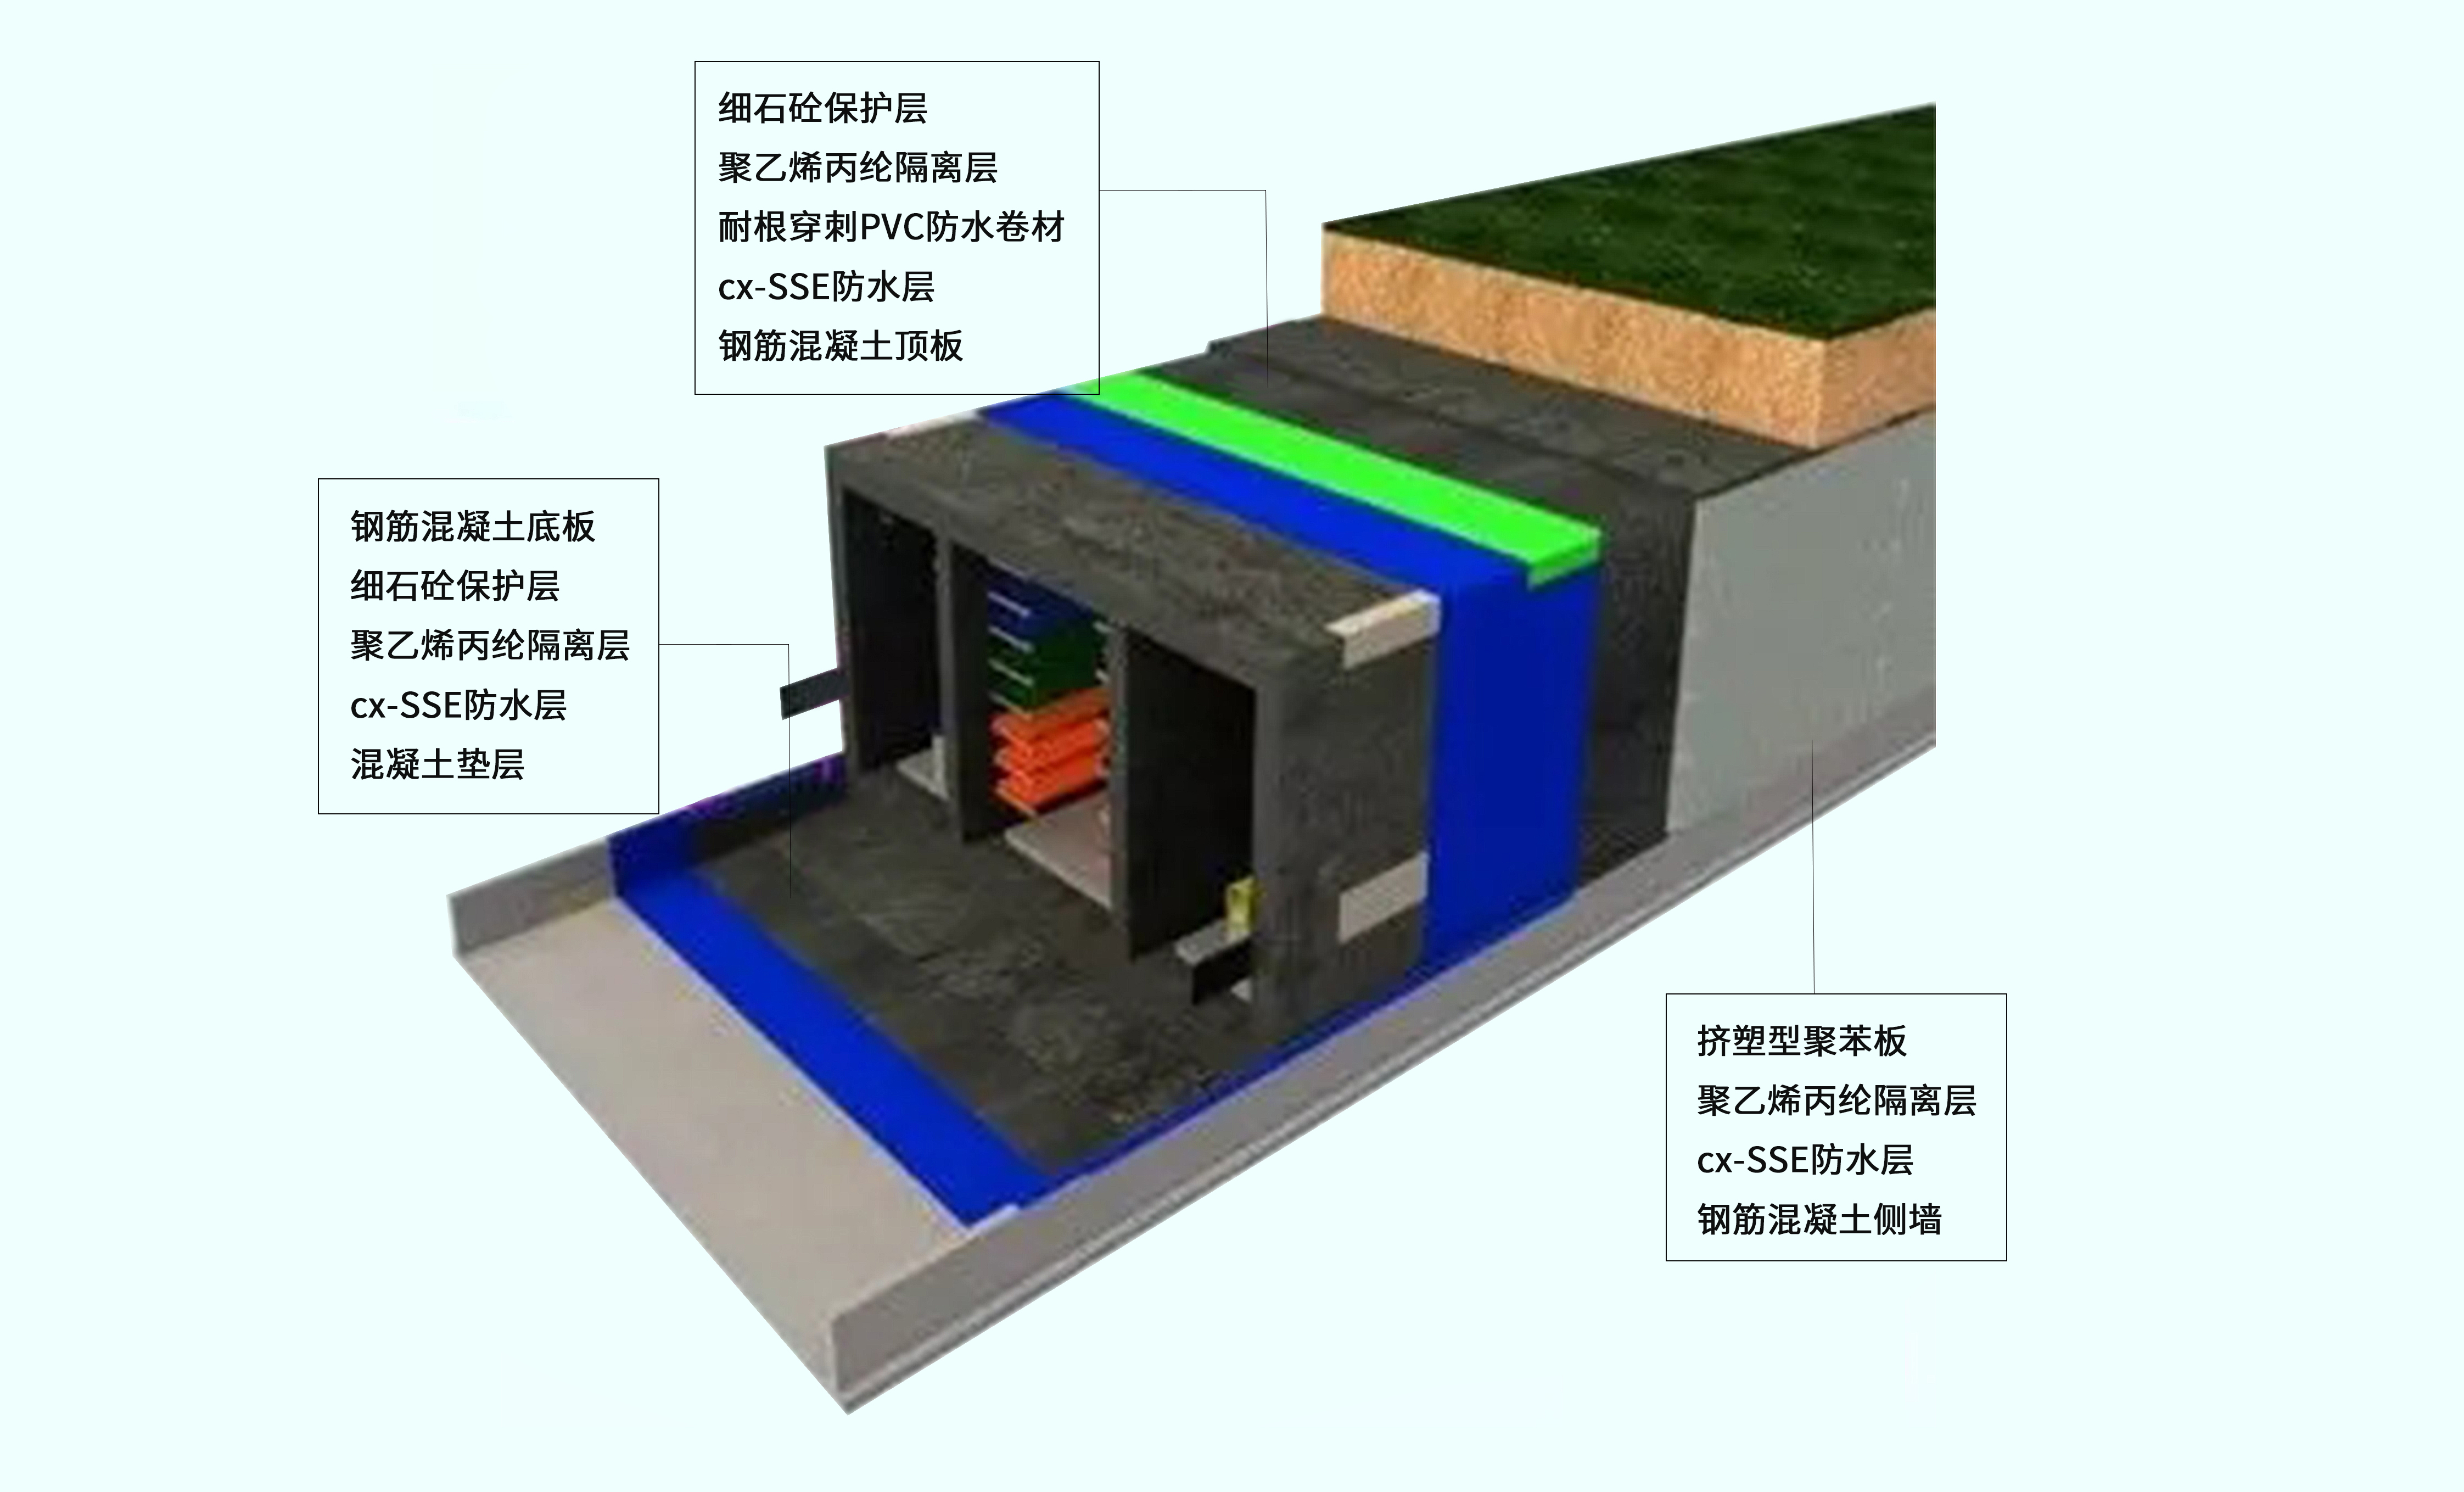 cx- UUT 都会综合管廊地下防水系统